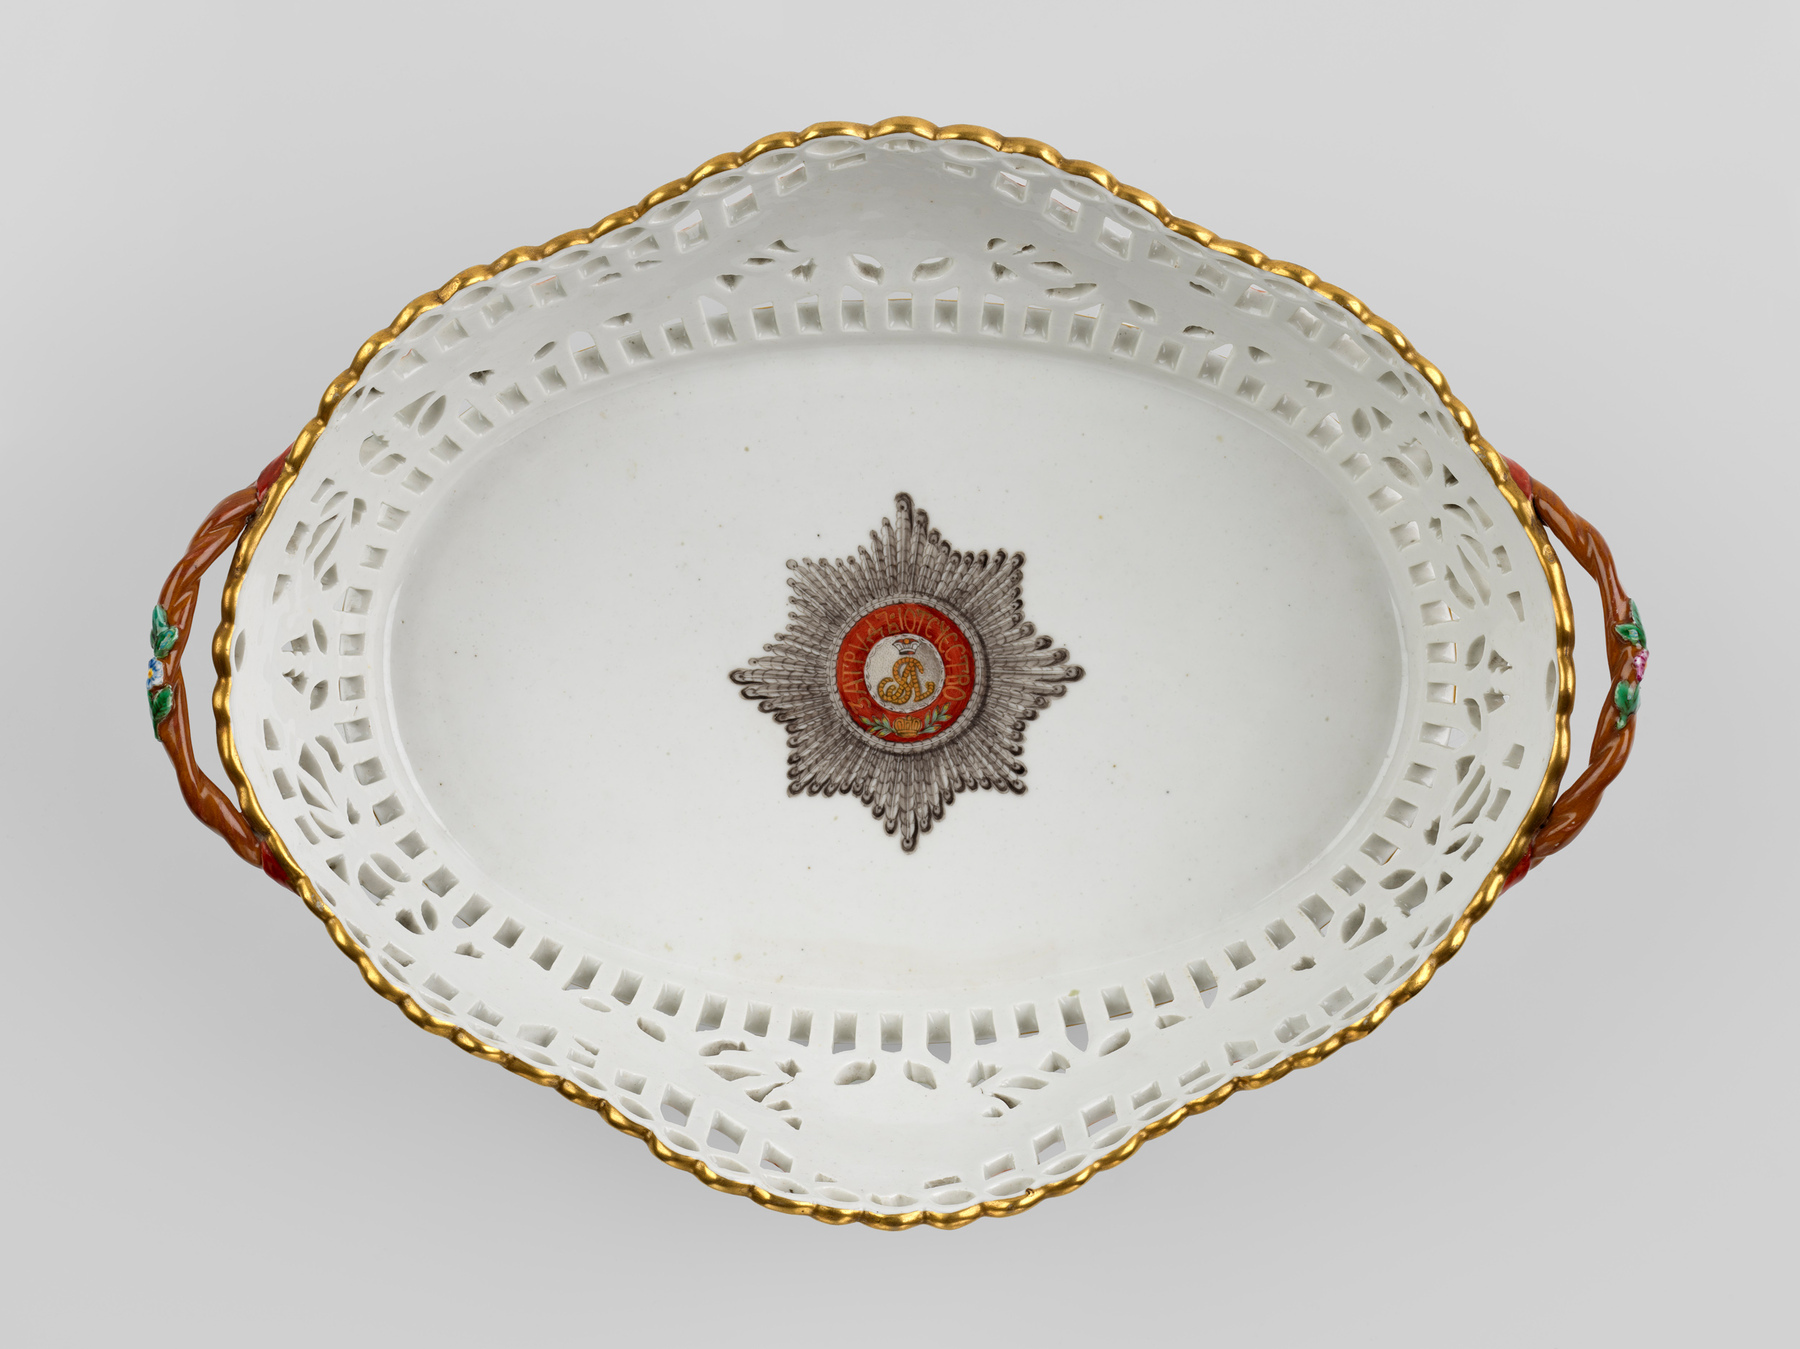 A Large Porcelain Basket from the Imperial Order of St Alexander Nevsky Service